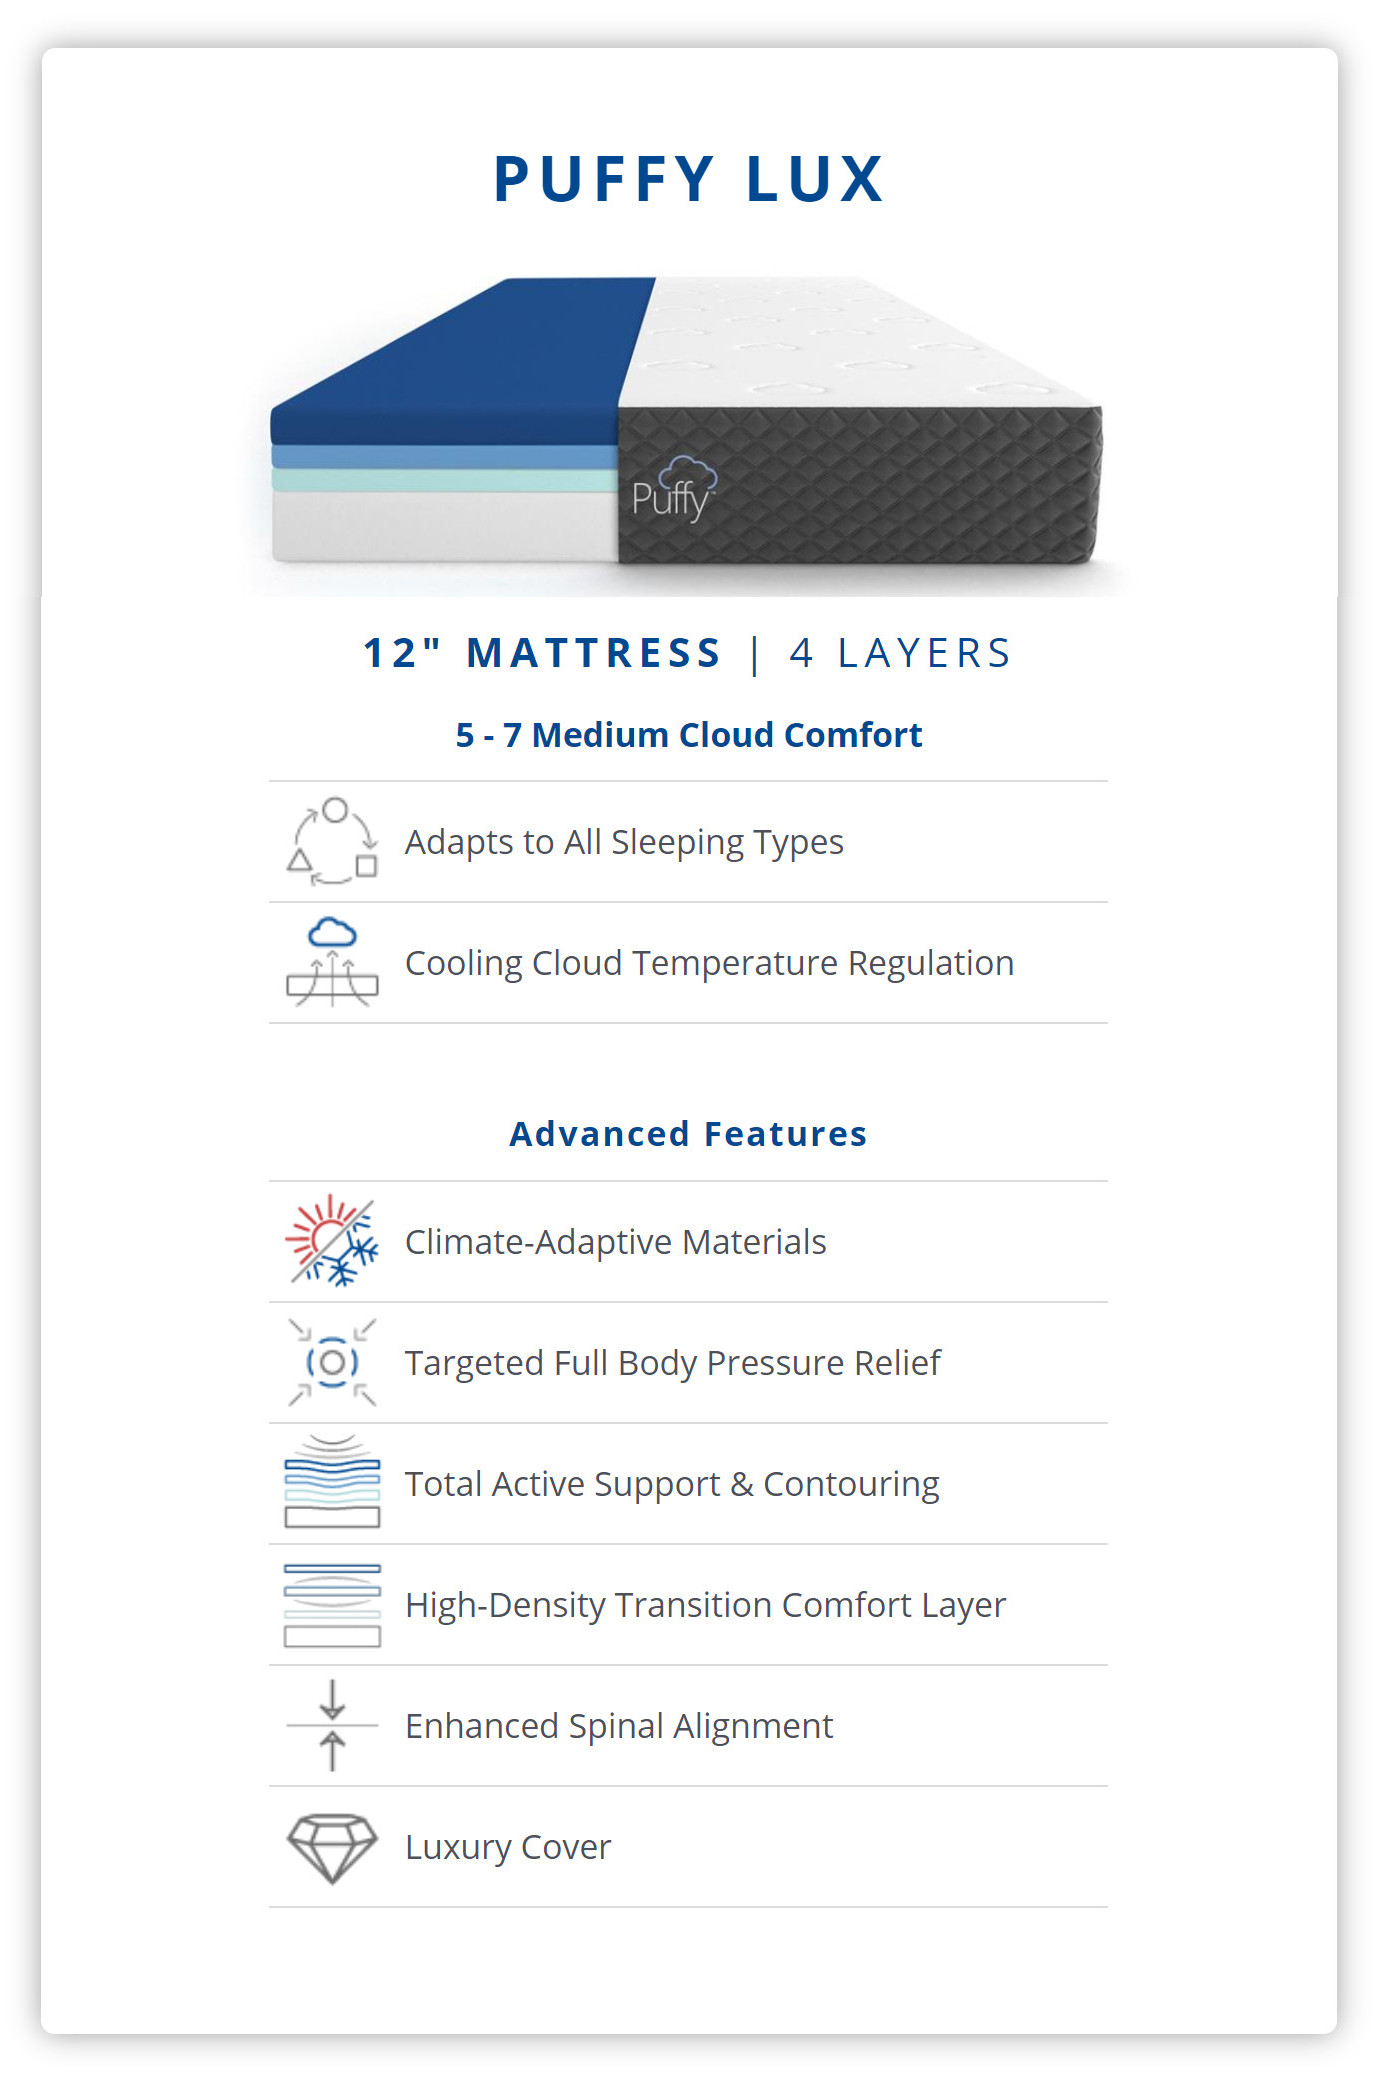 puffy lux mattress summary